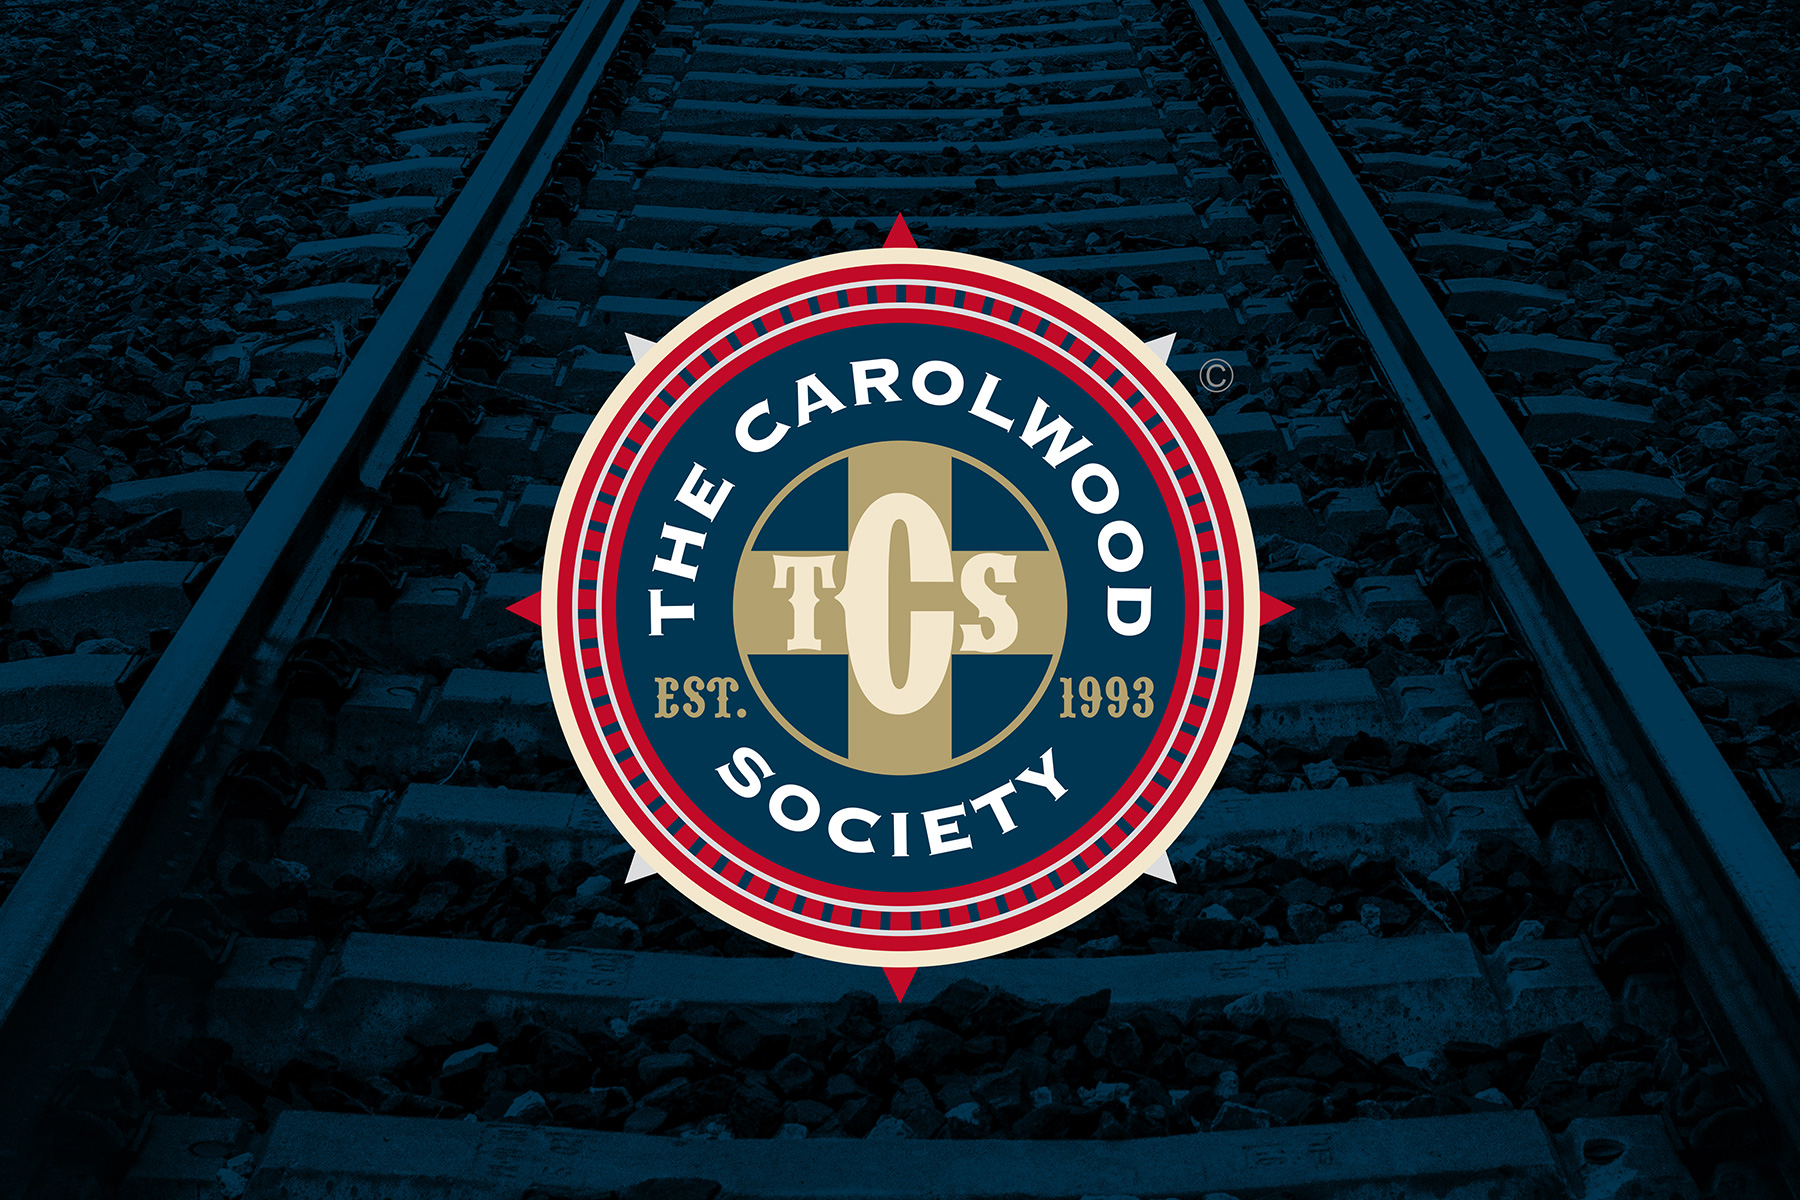 Disney's The Carolwood Society brand design